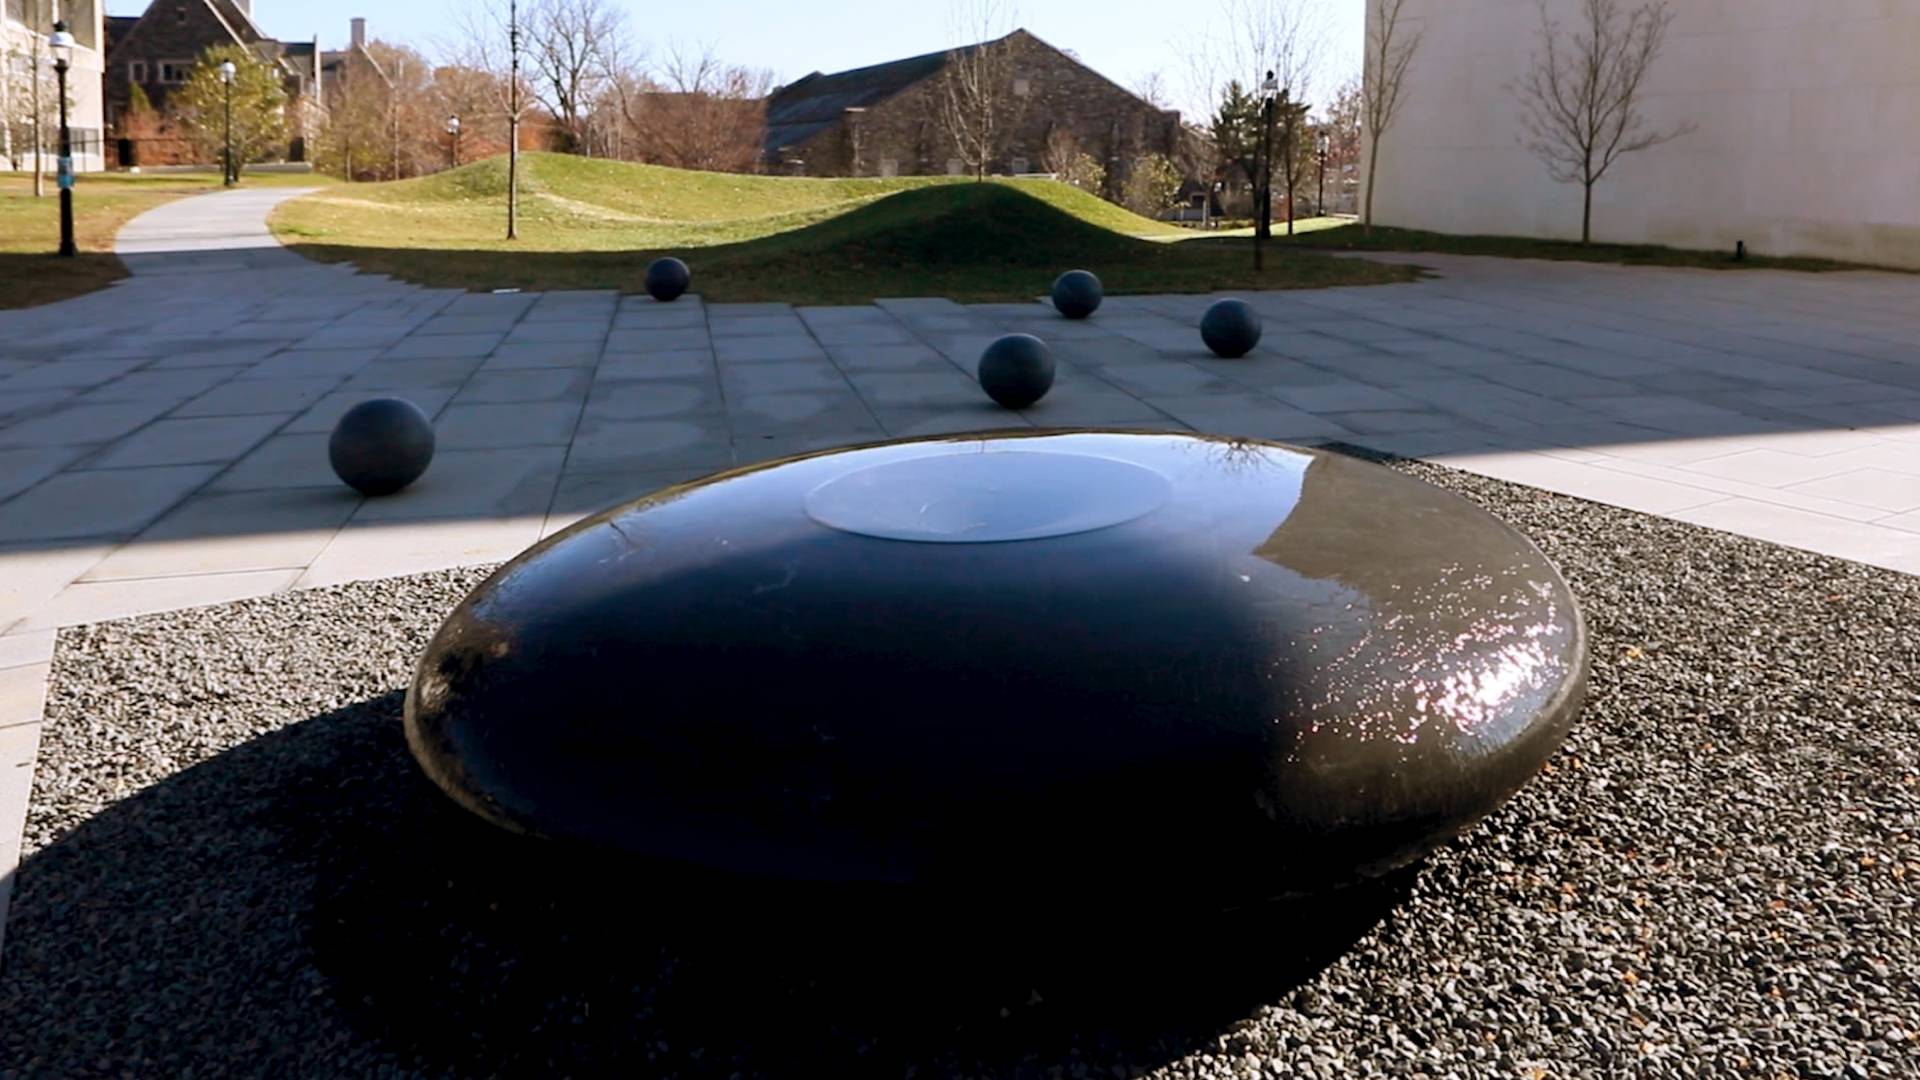 Maya Lin's environmental installation, consisting of water running over a dark, smooth oviod stone